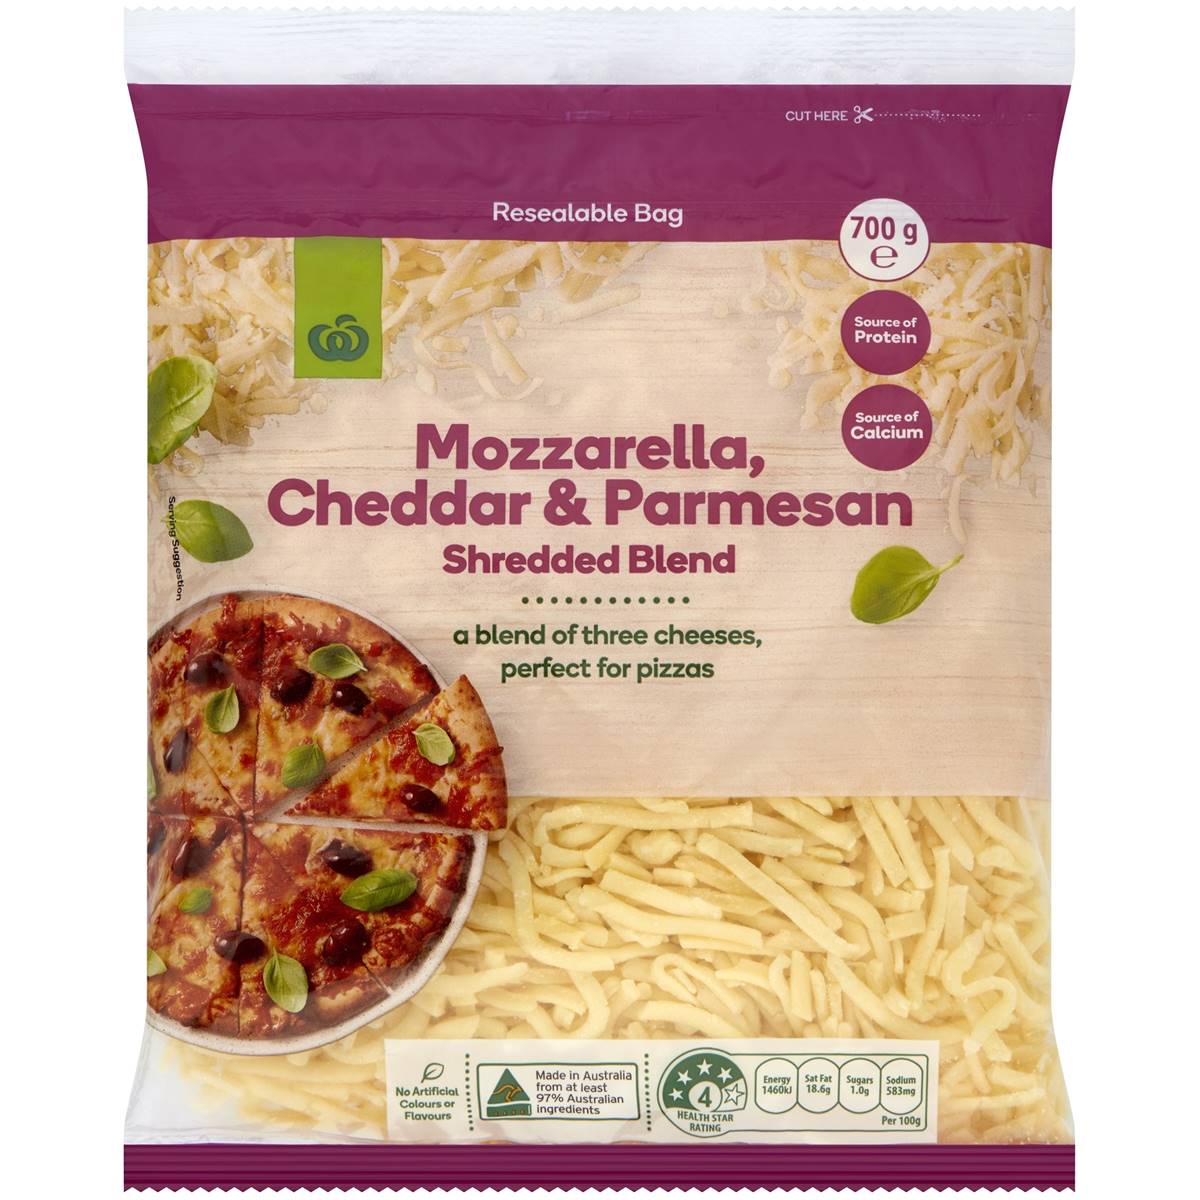 Calories in Woolworths Mozzarella Cheddar & Parmesan Shredded Blend